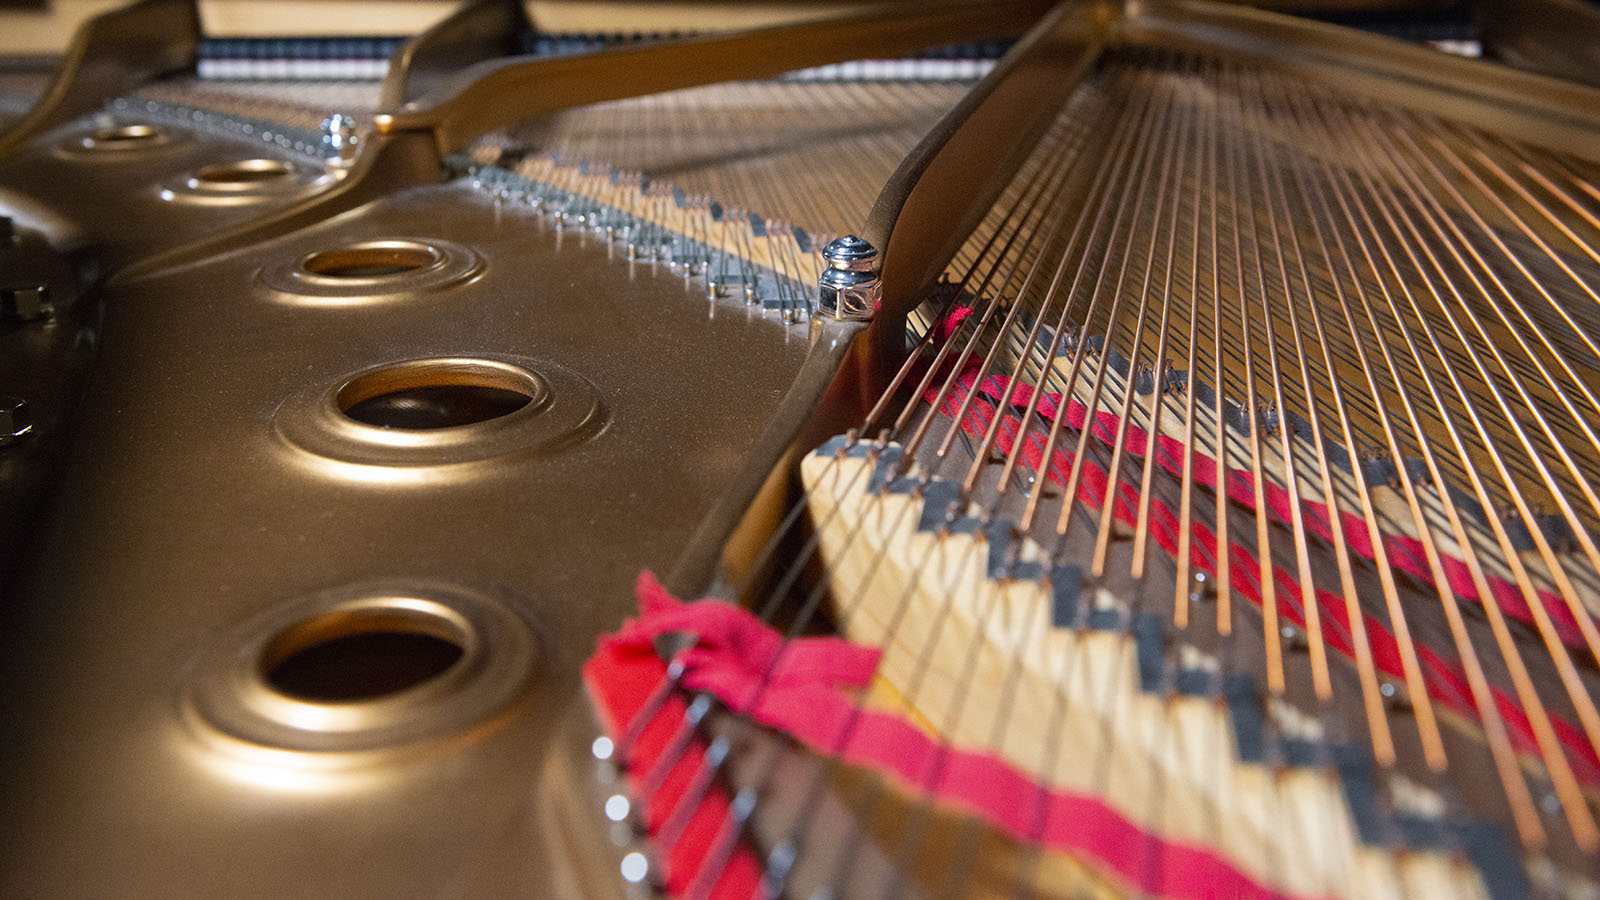 A close-up photo of a piano.